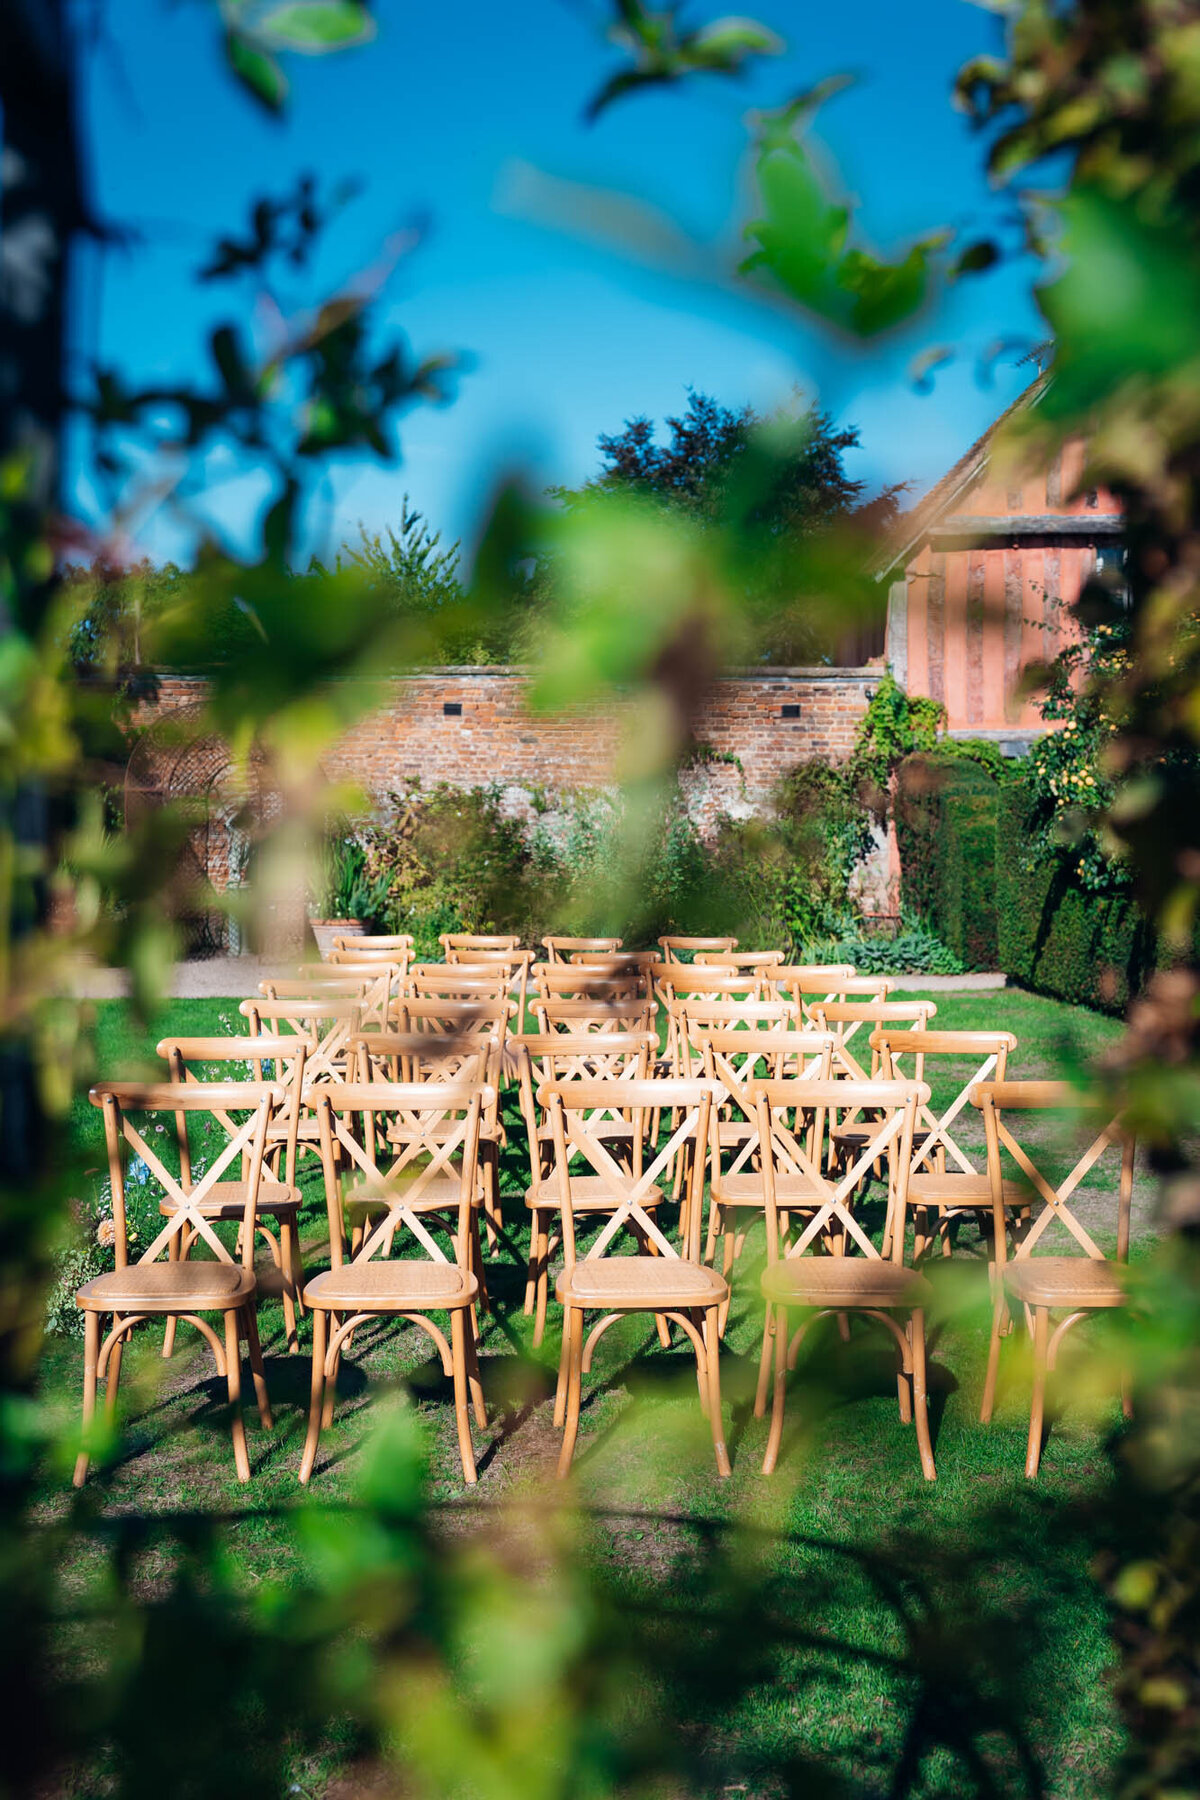 Gloucestershire-wedding-photographer-outdoor-ceremony-set-up-at-pauntley-court